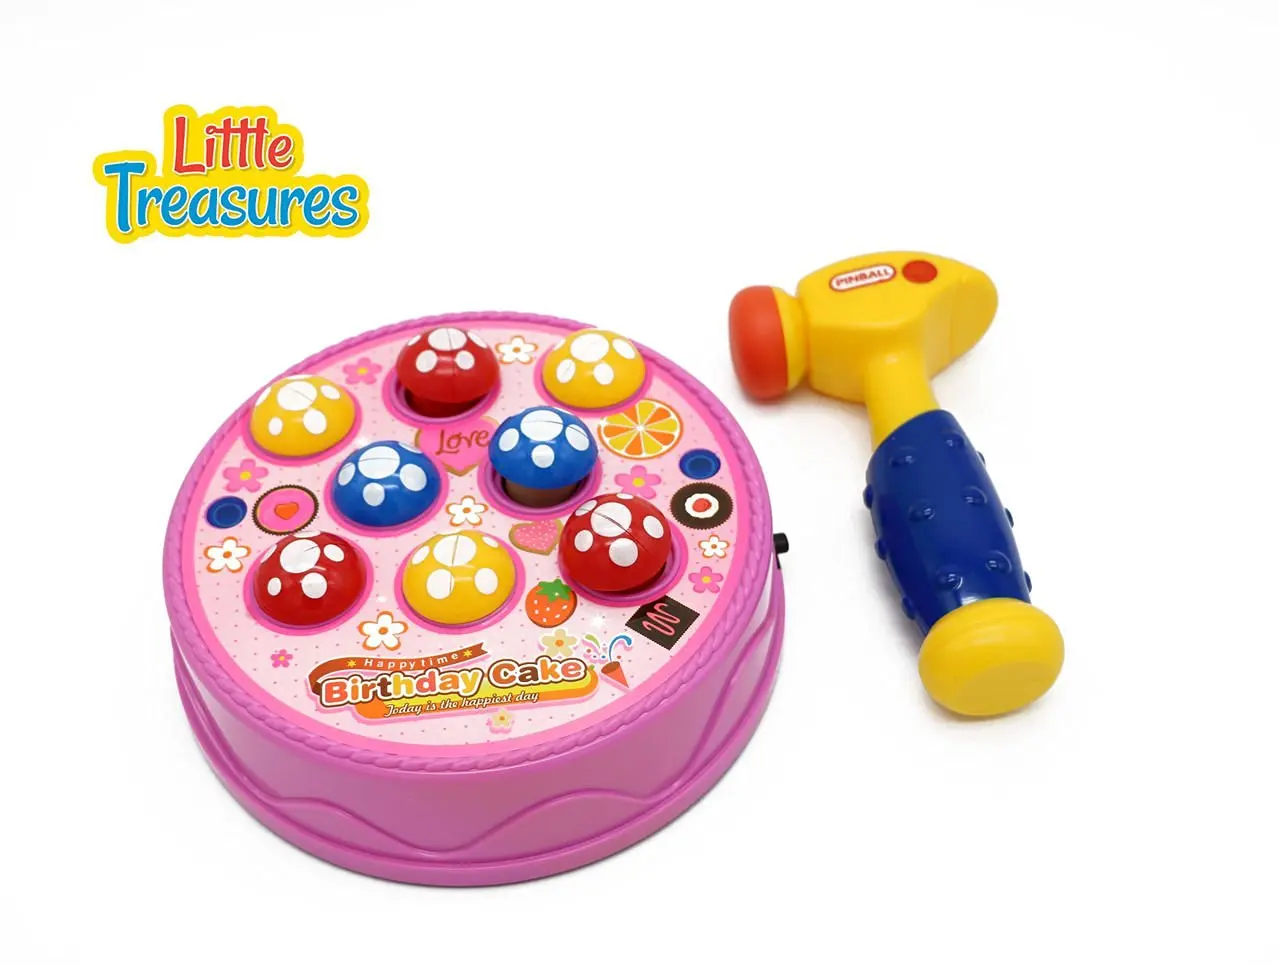 Little treasures. Игрушка пинбол с шариком. Пинбол игрушка для детей шарики и молоток. Сортеры с молоточком Playball Mini.